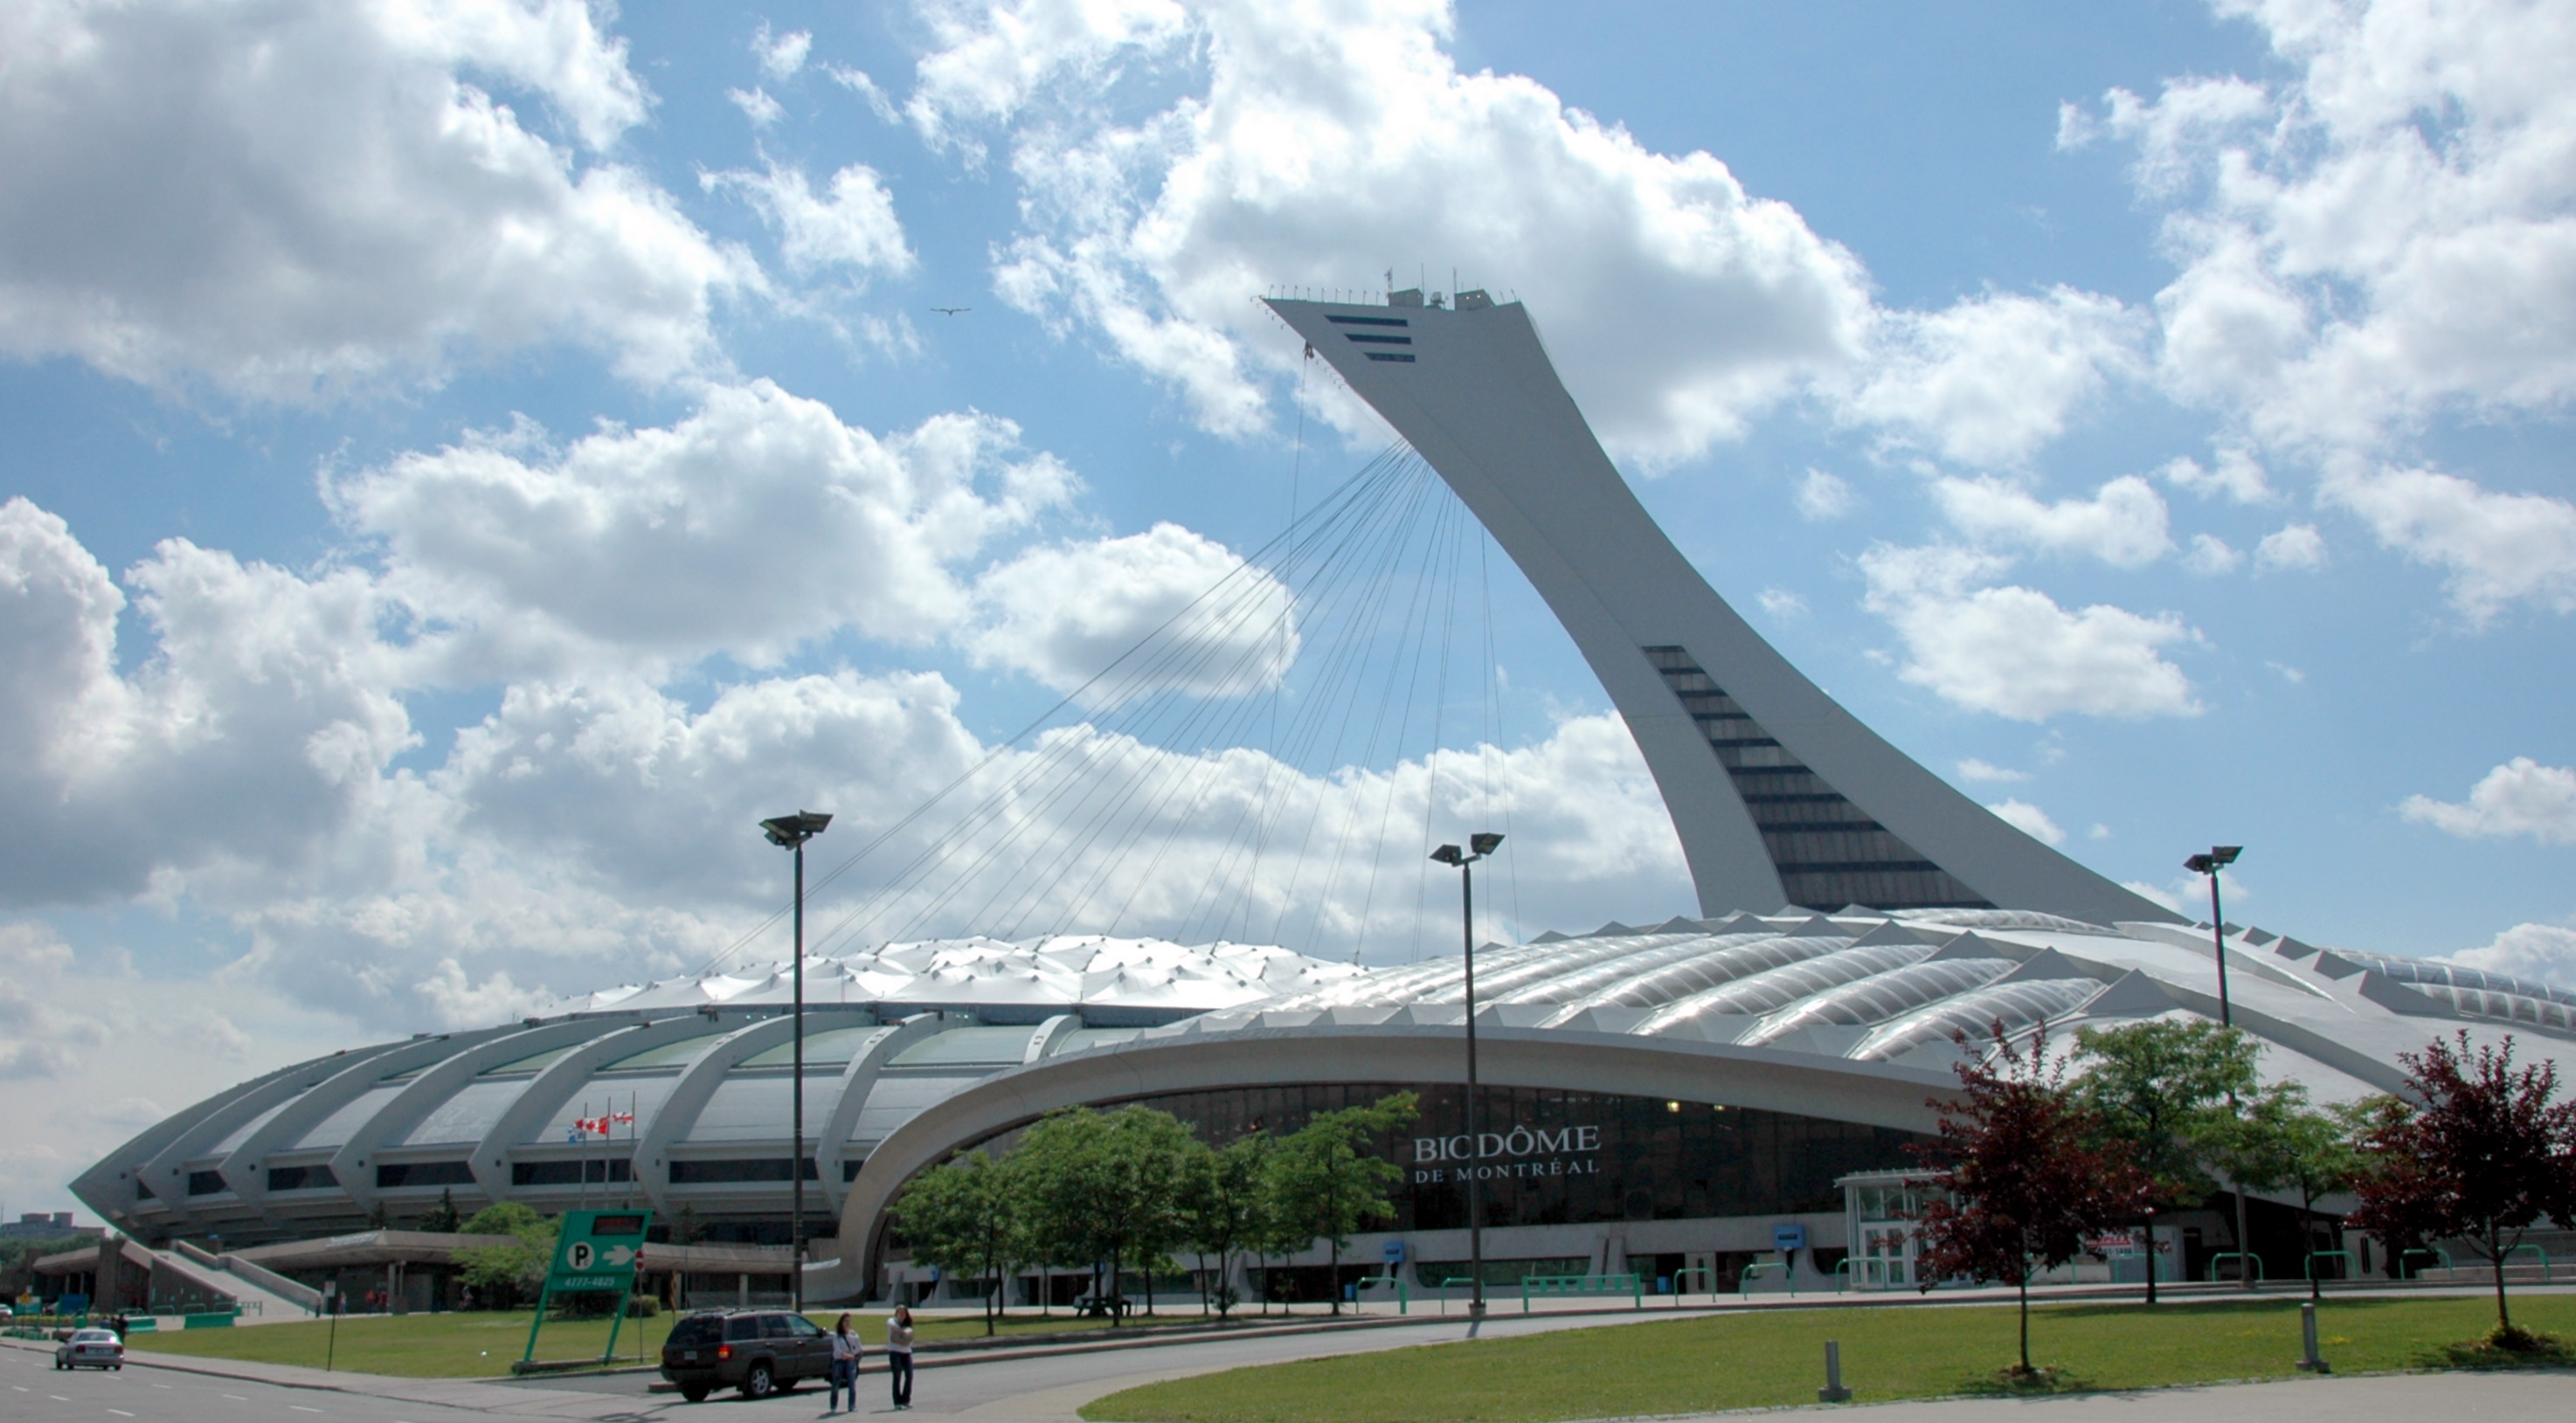 Archivo:Biodome de Montreal.jpg - Wikipedia, la enciclopedia libre